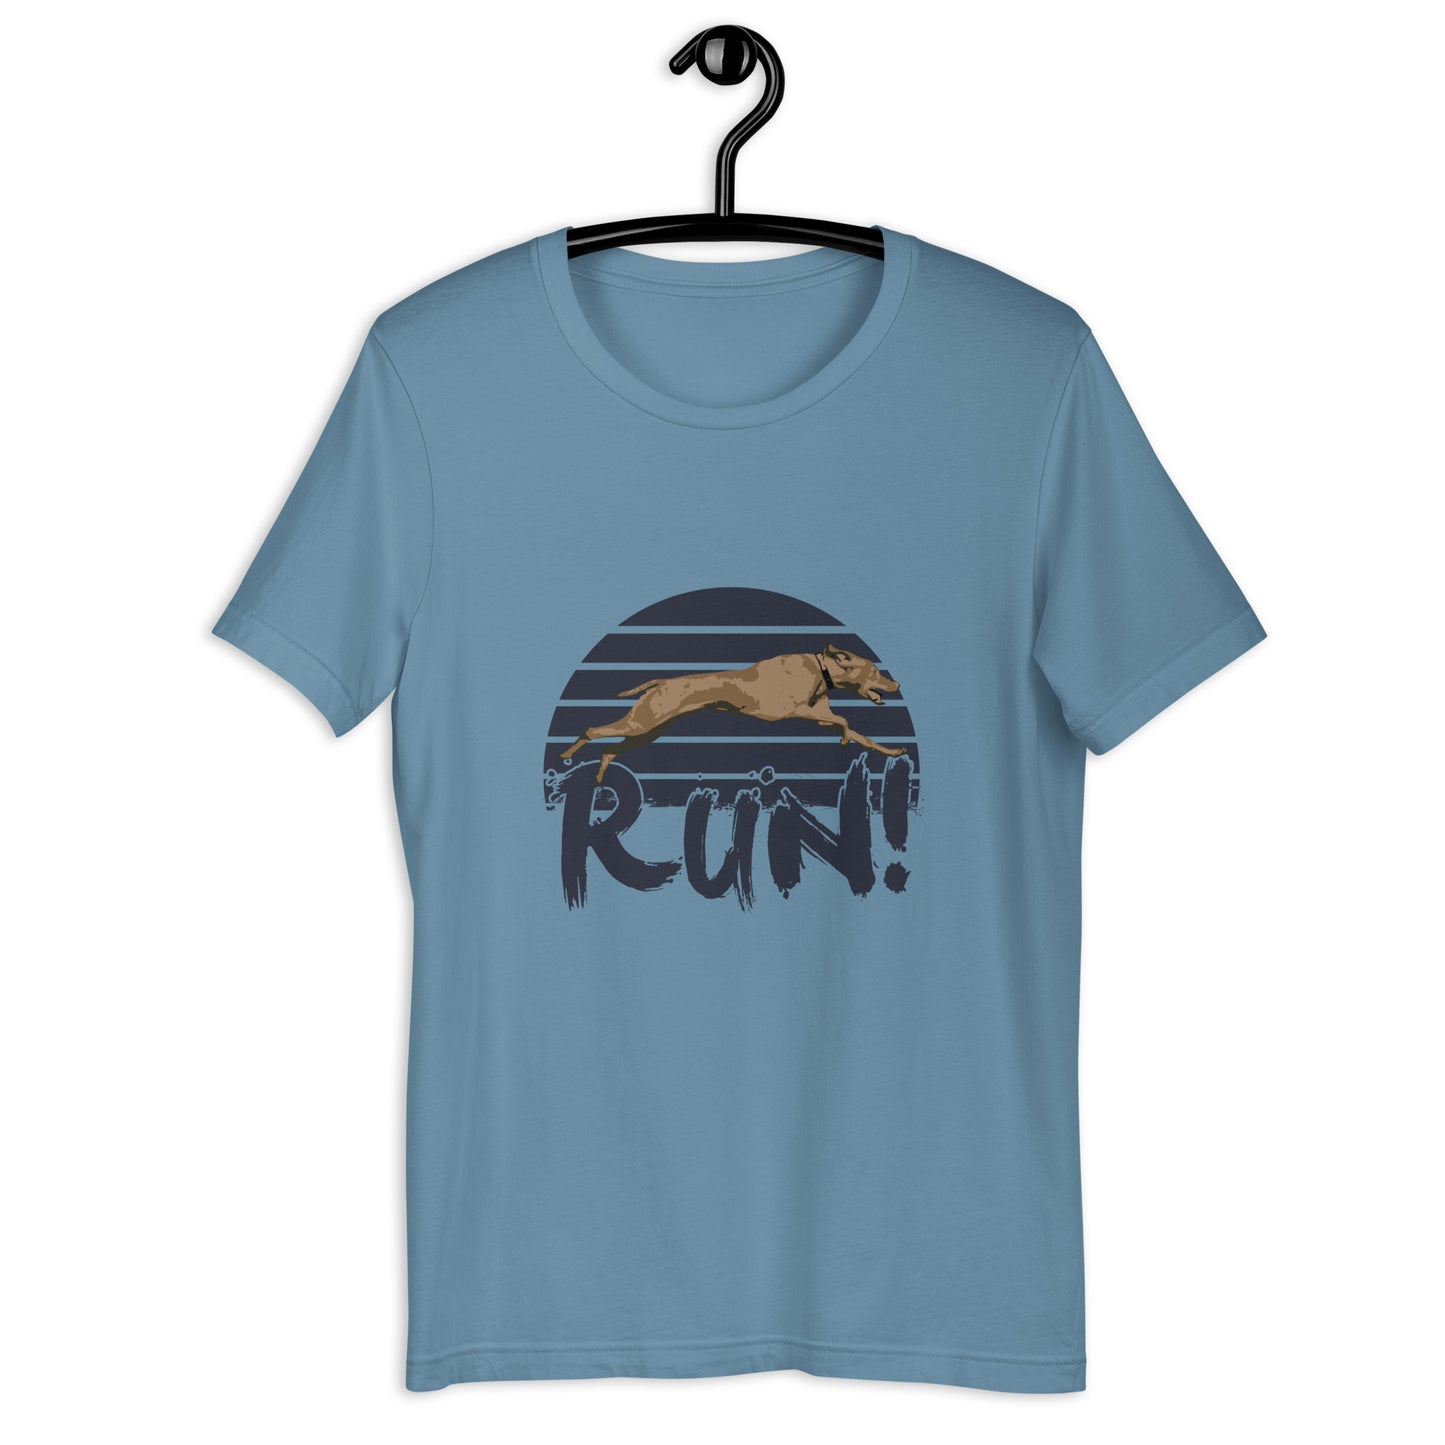 RUN - VIZSLA - Unisex t-shirt